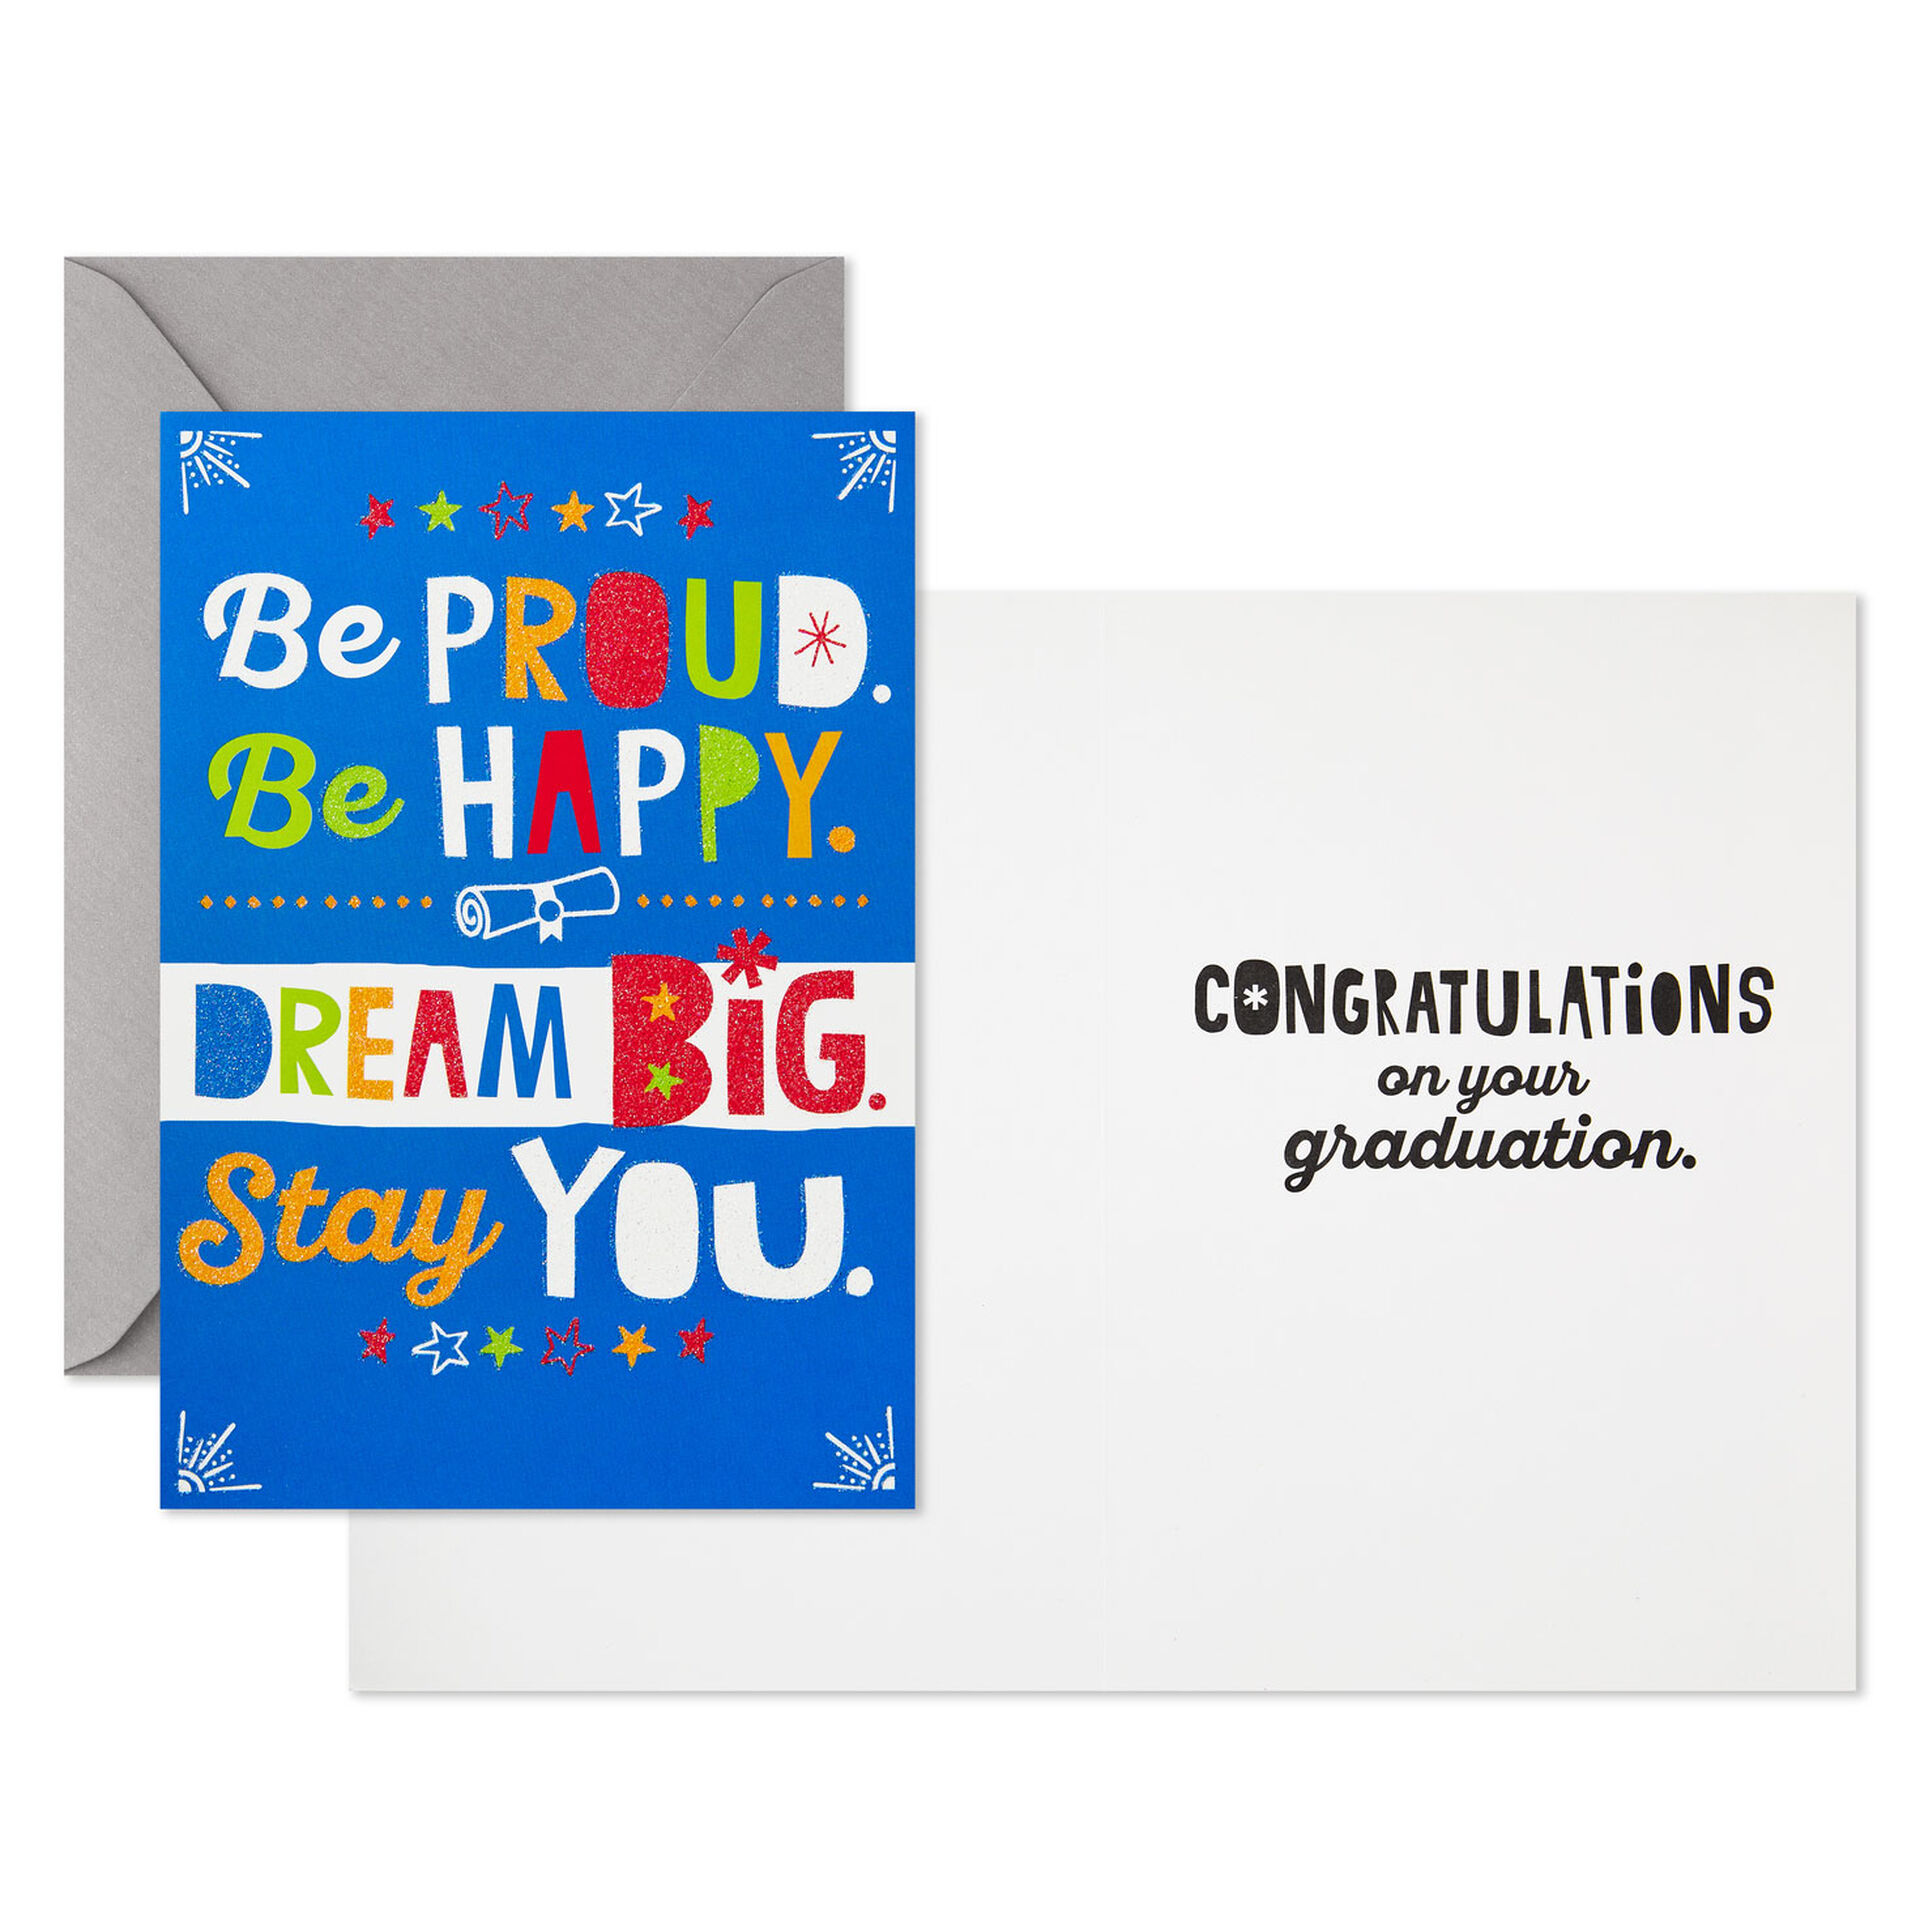 Dream-Big-Stay-You-Graduation-Cards-Bulk-Pack_799GRP8125_02